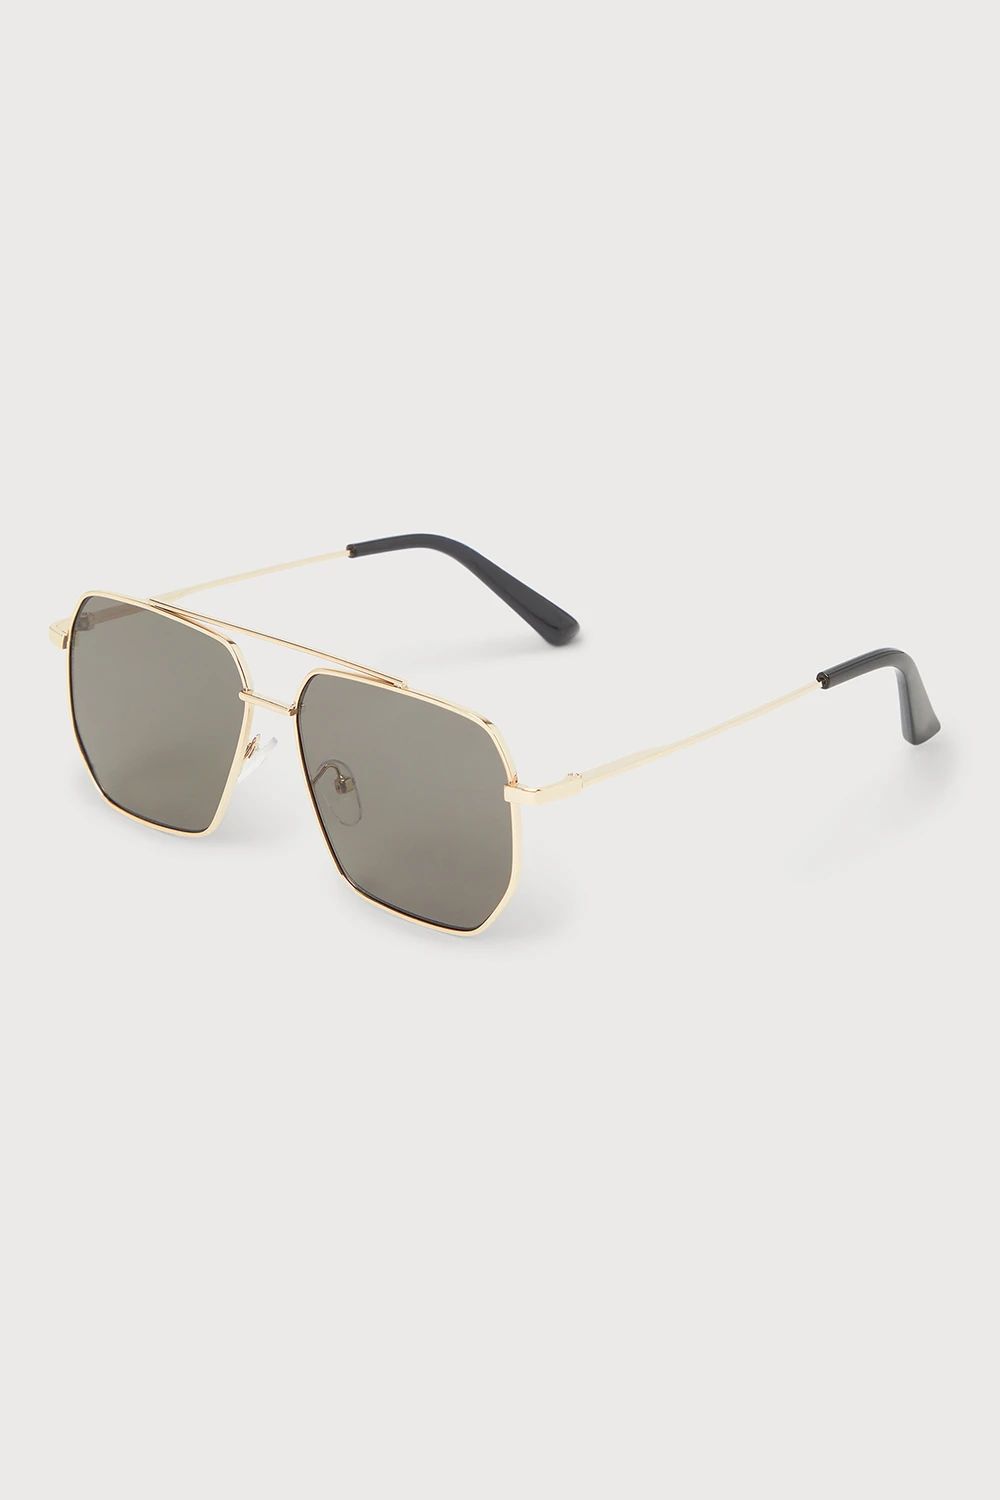 Totally Too Cool Gold Aviator Sunglasses | Lulus (US)